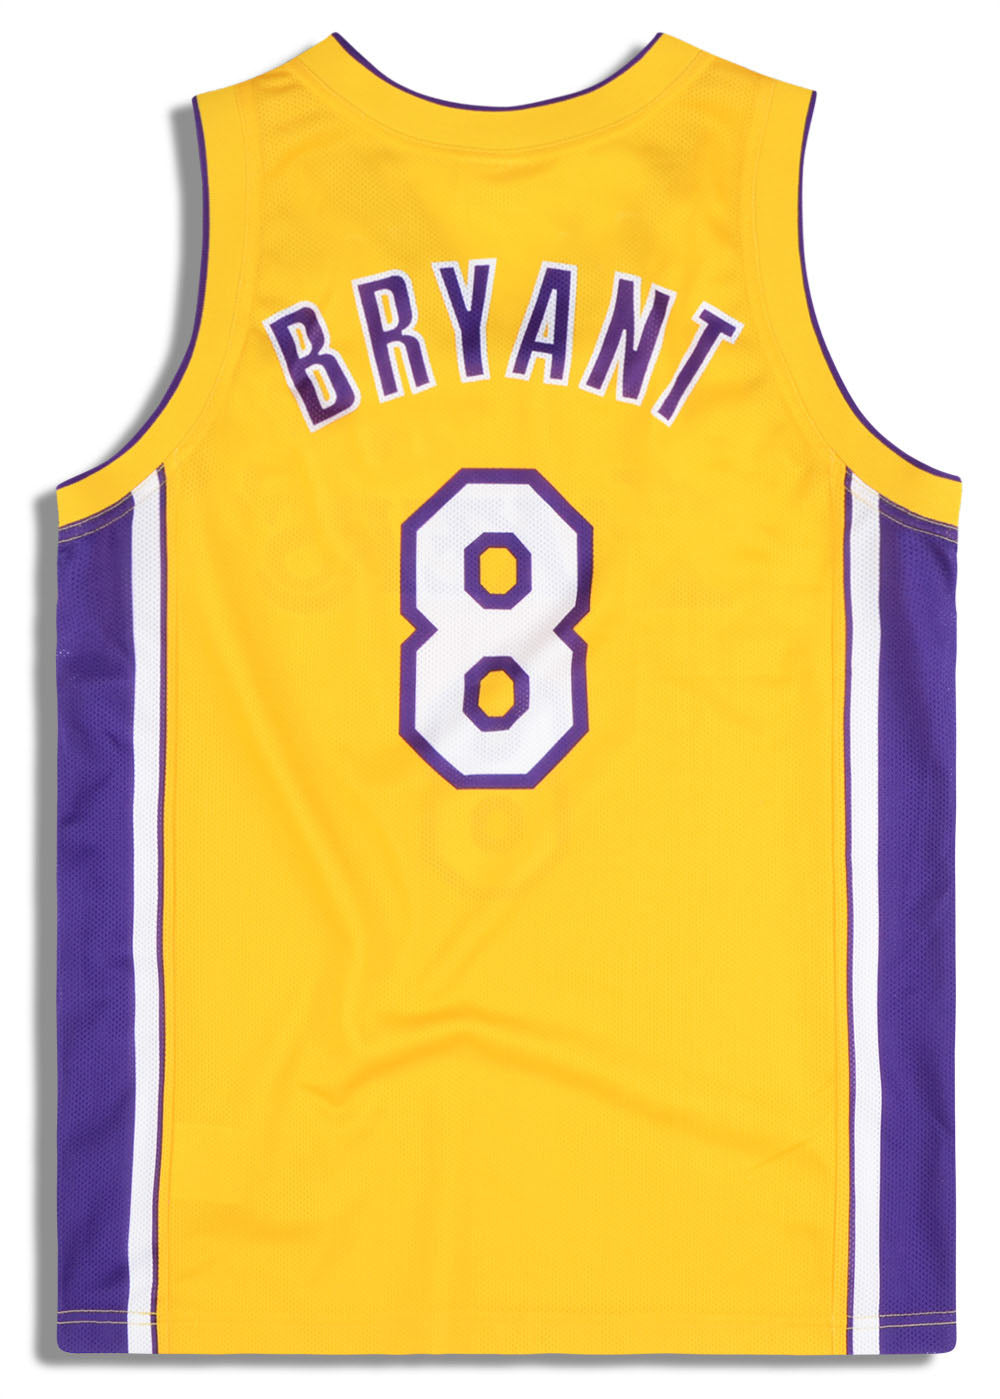 NBA Champion Kobe Bryant #8 Los Angeles Lakers Basketballl Jersey